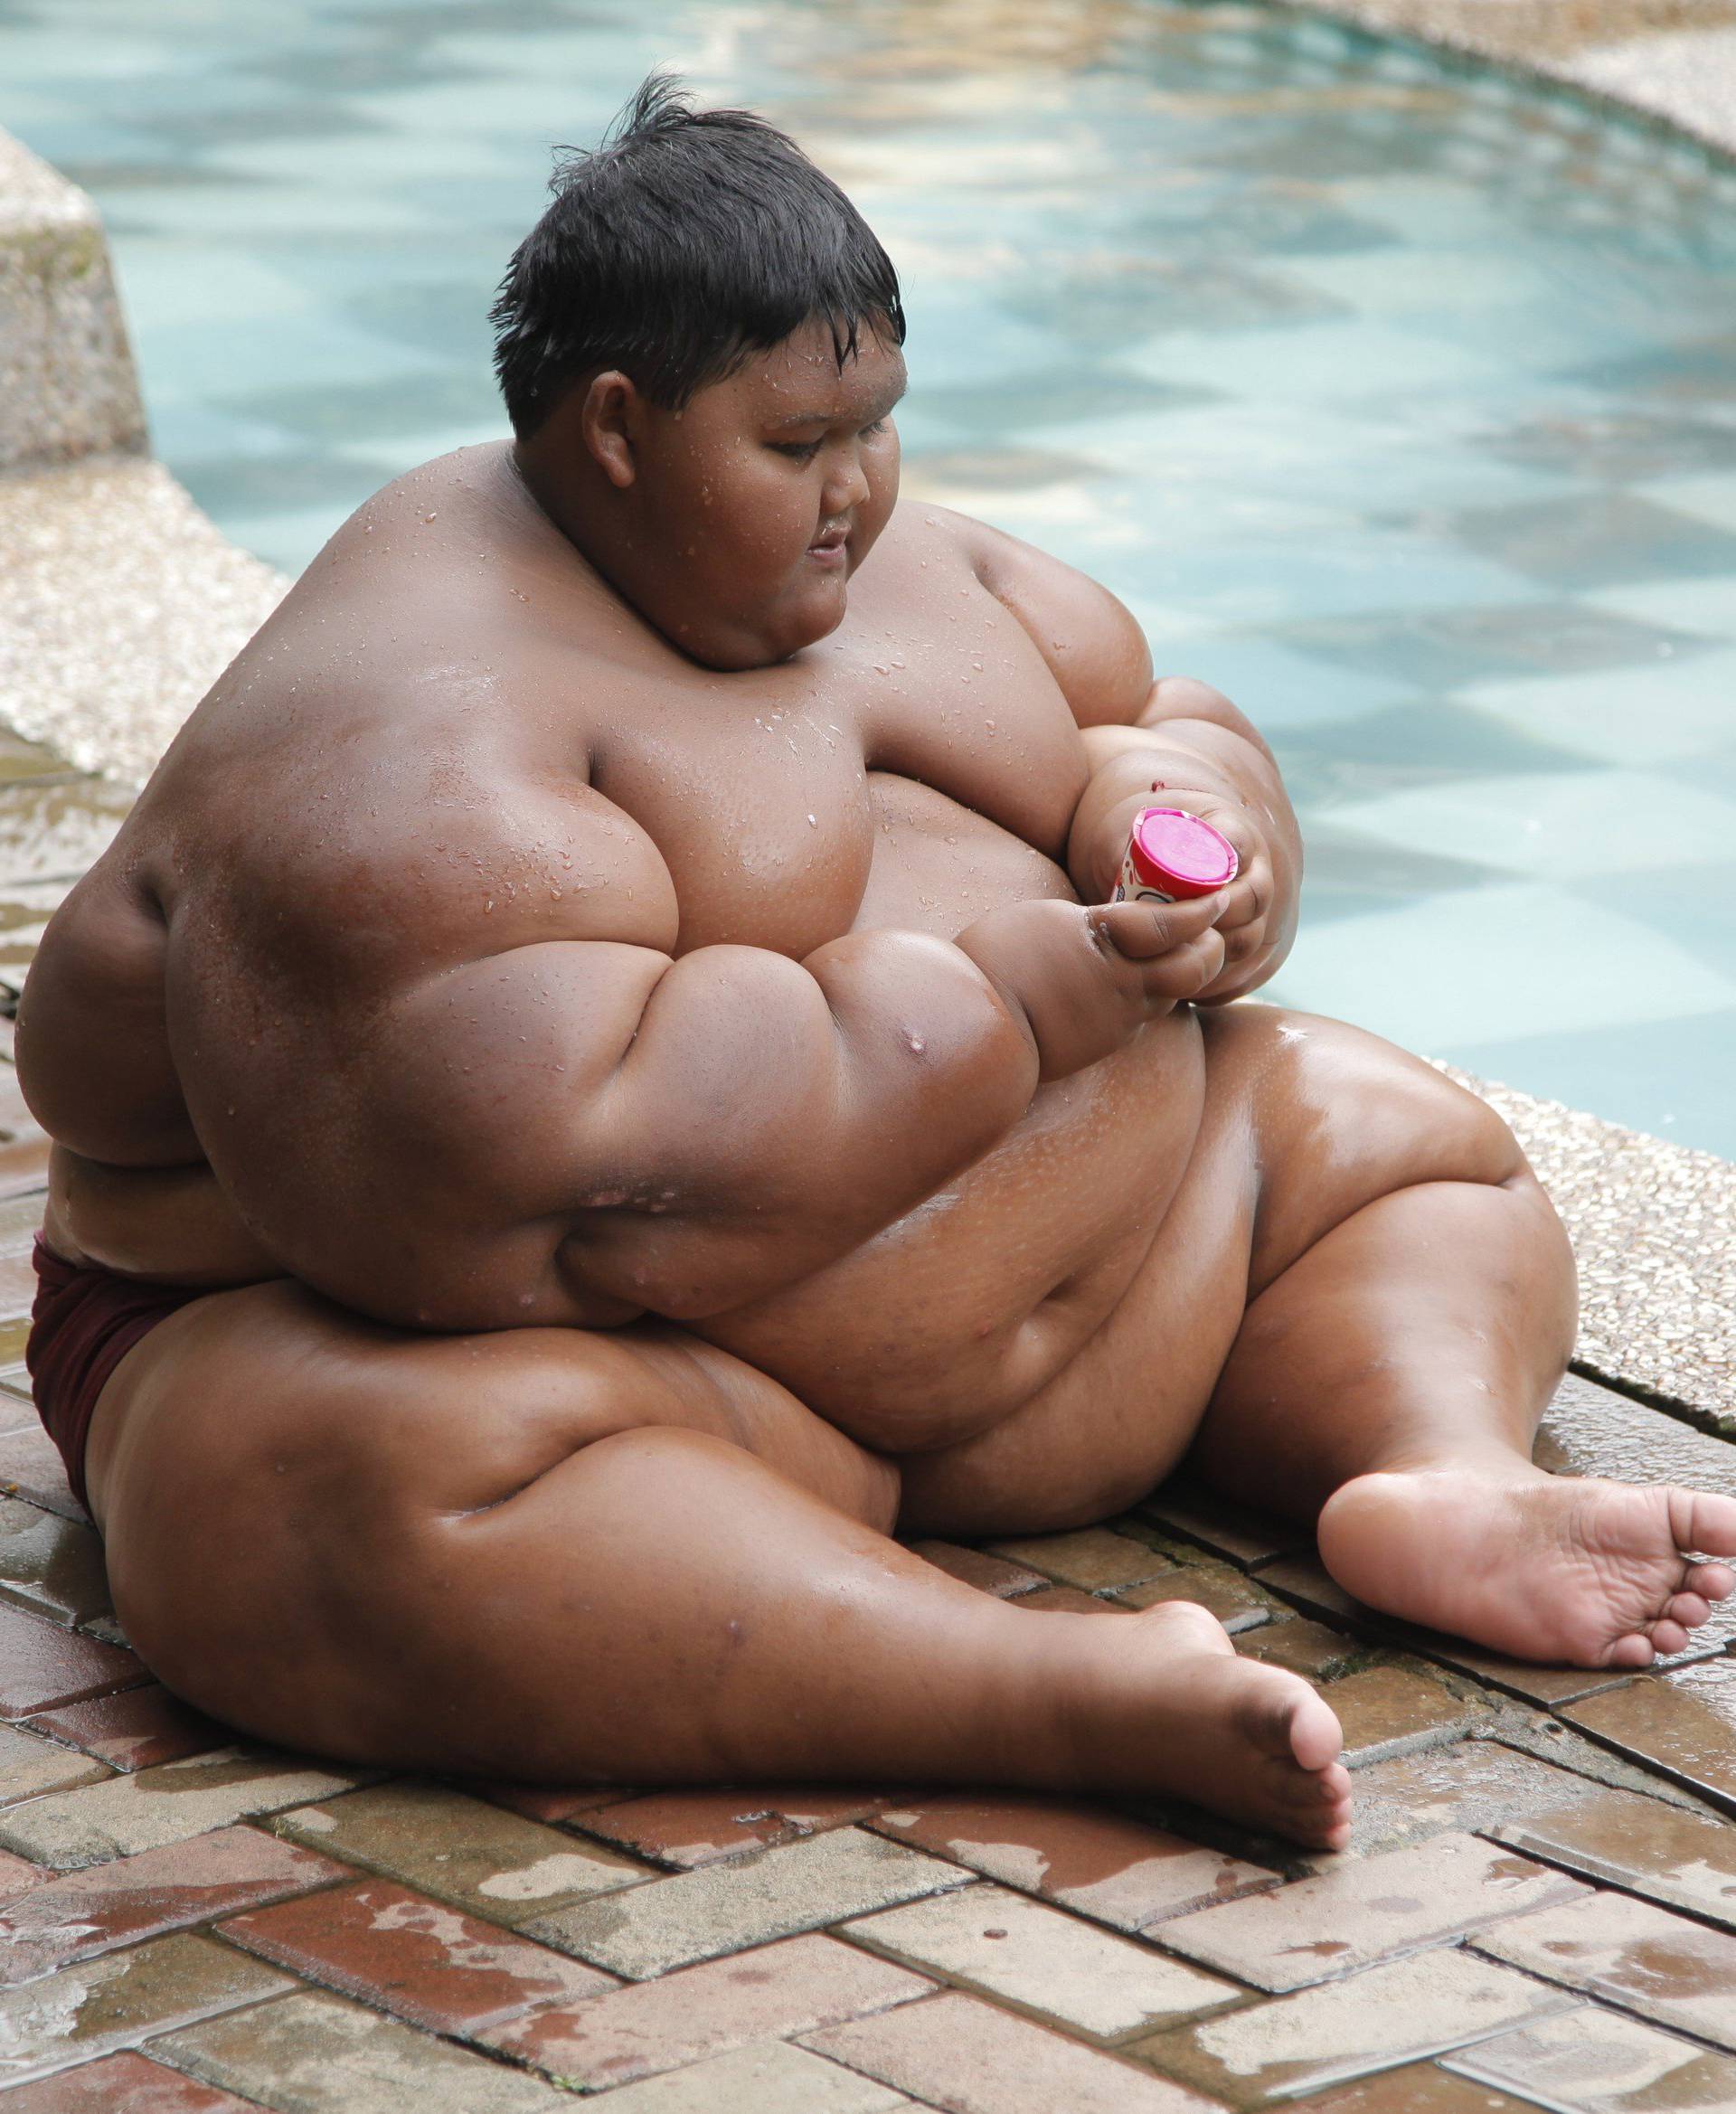 World's Heaviest Child Has Weight Loss Surgery